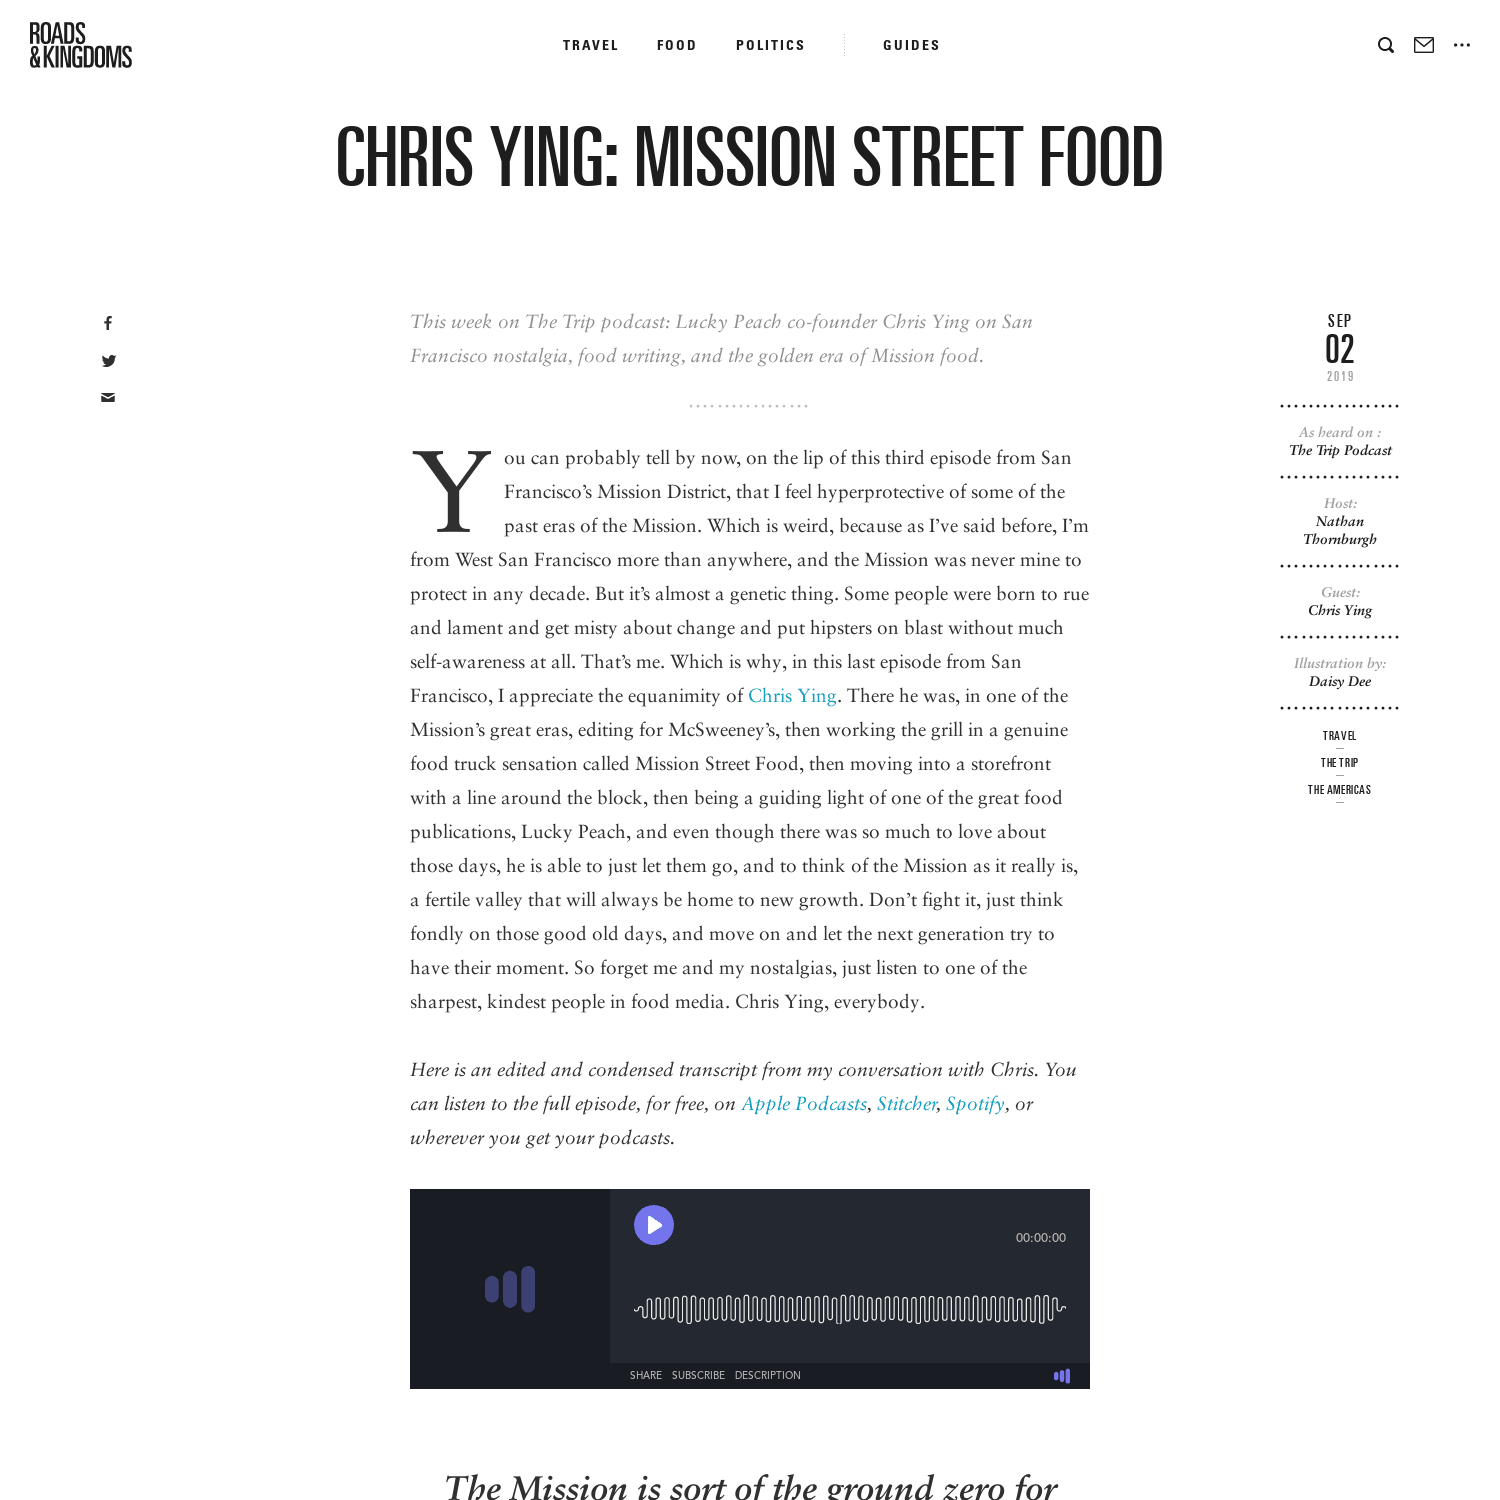 Chris Ying: Mission Street Food